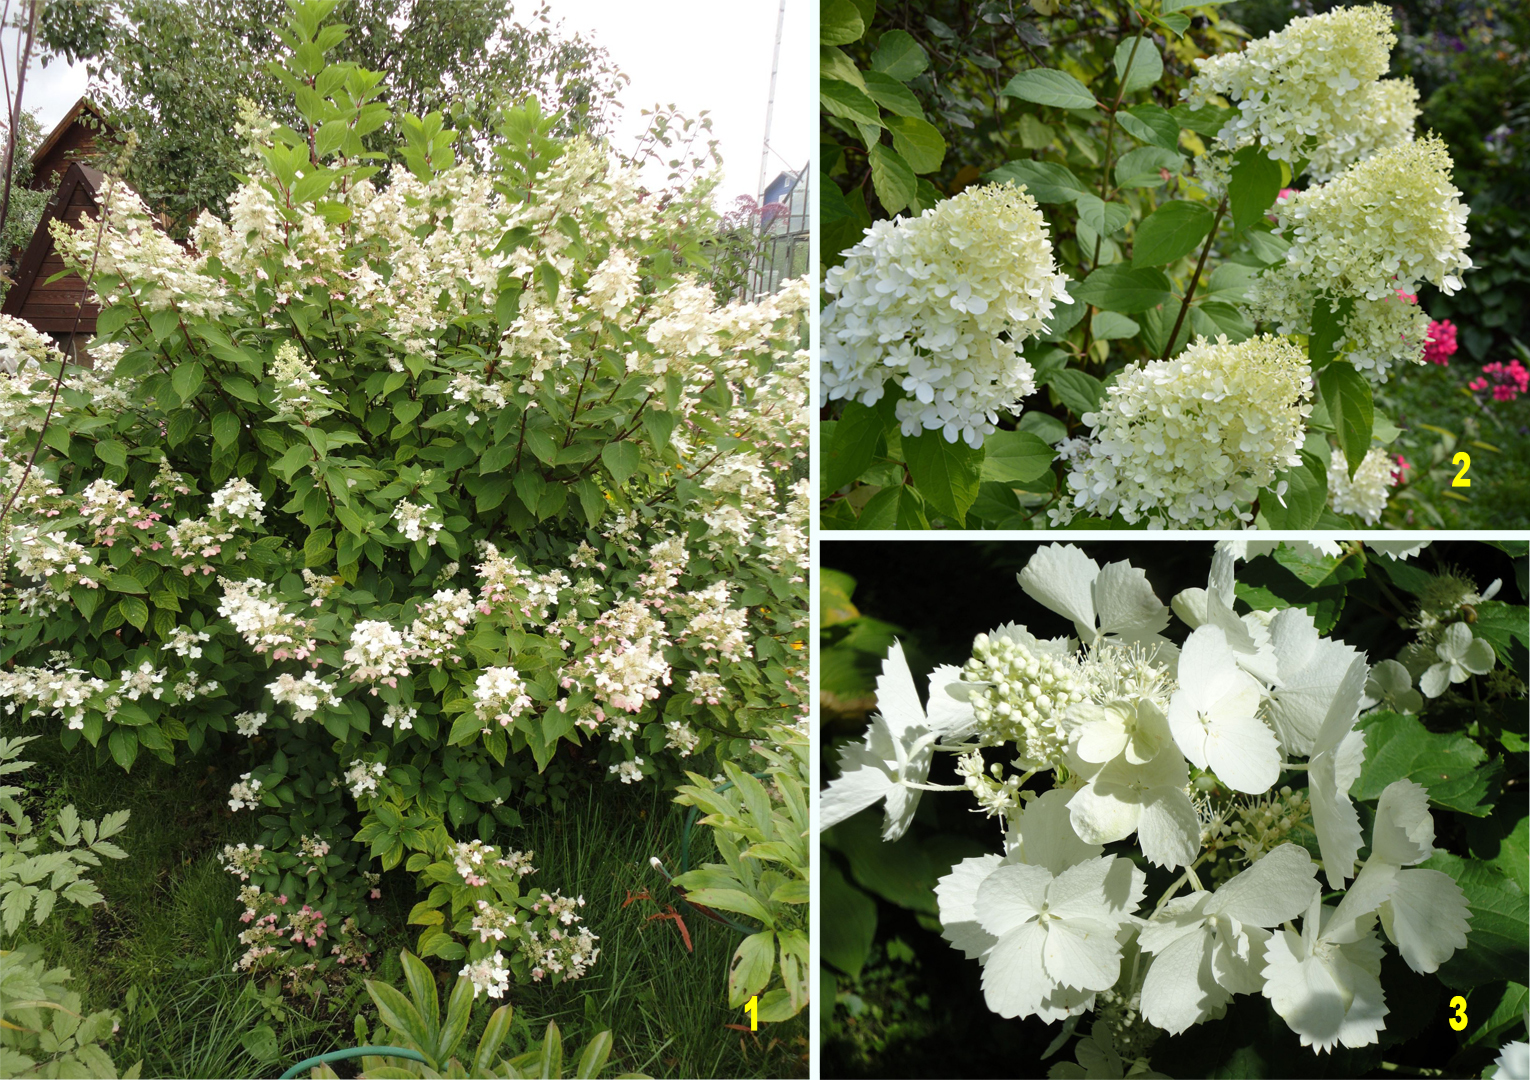 Гортензии метельчатые для белого сада: Kyushu (1), Limelight (2), White Lady (3). Фото автора